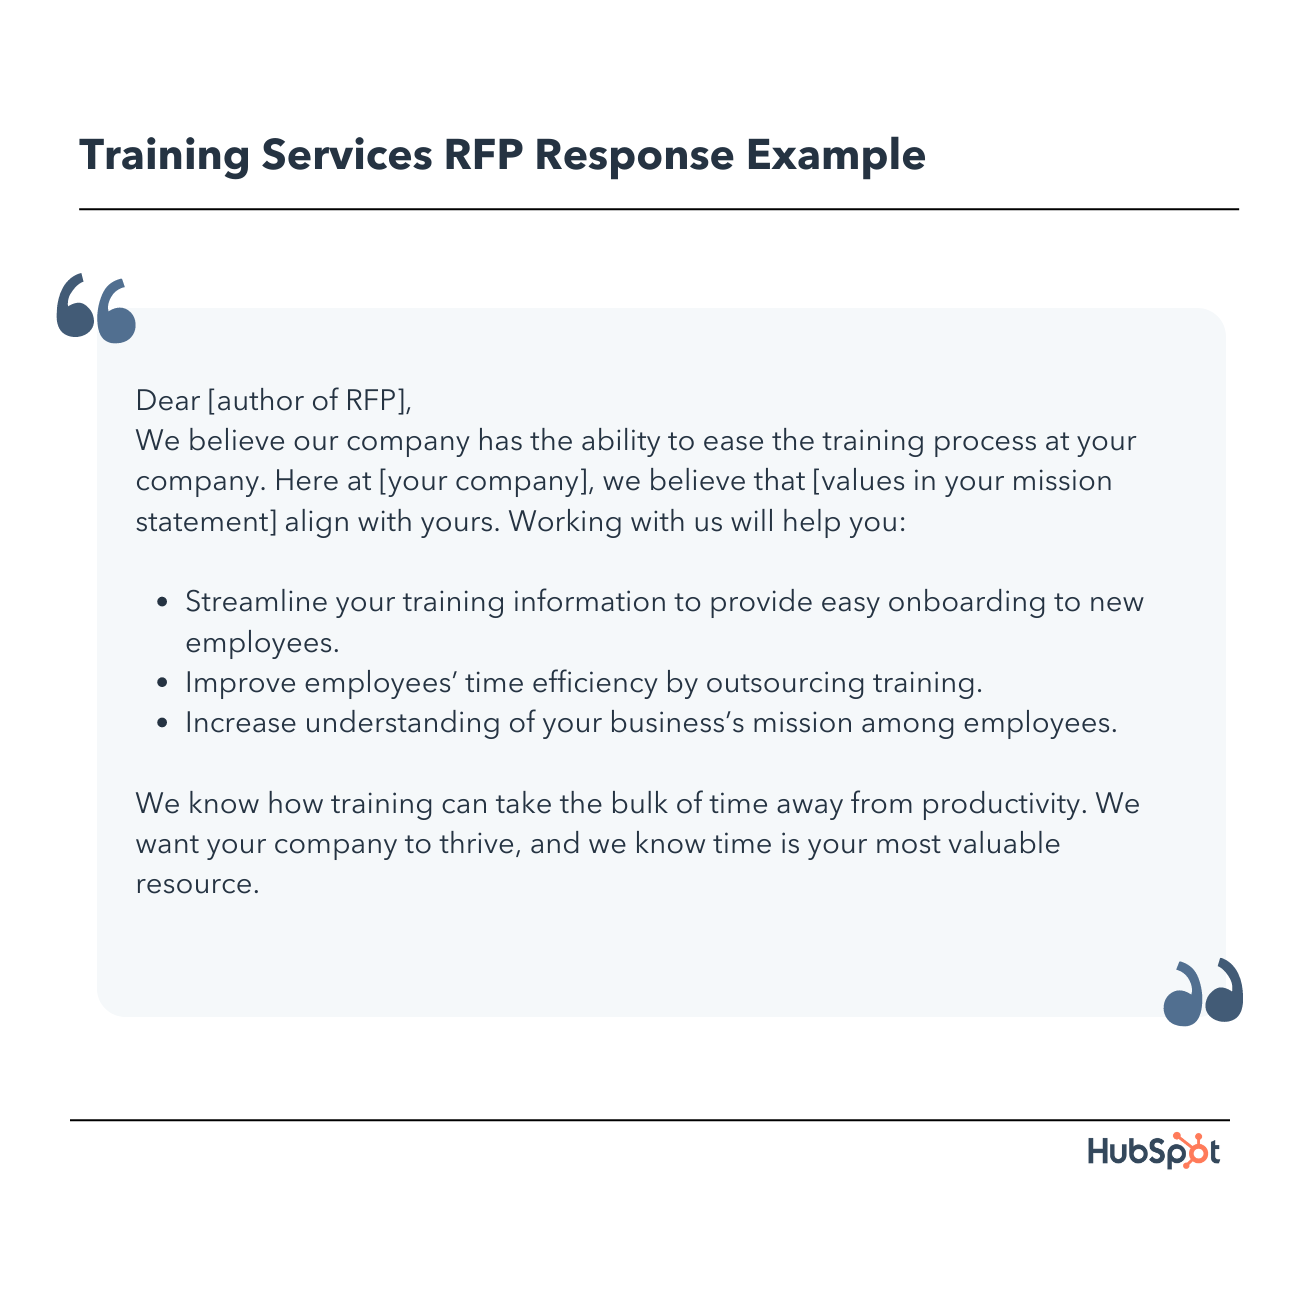 Training Services RFP Response